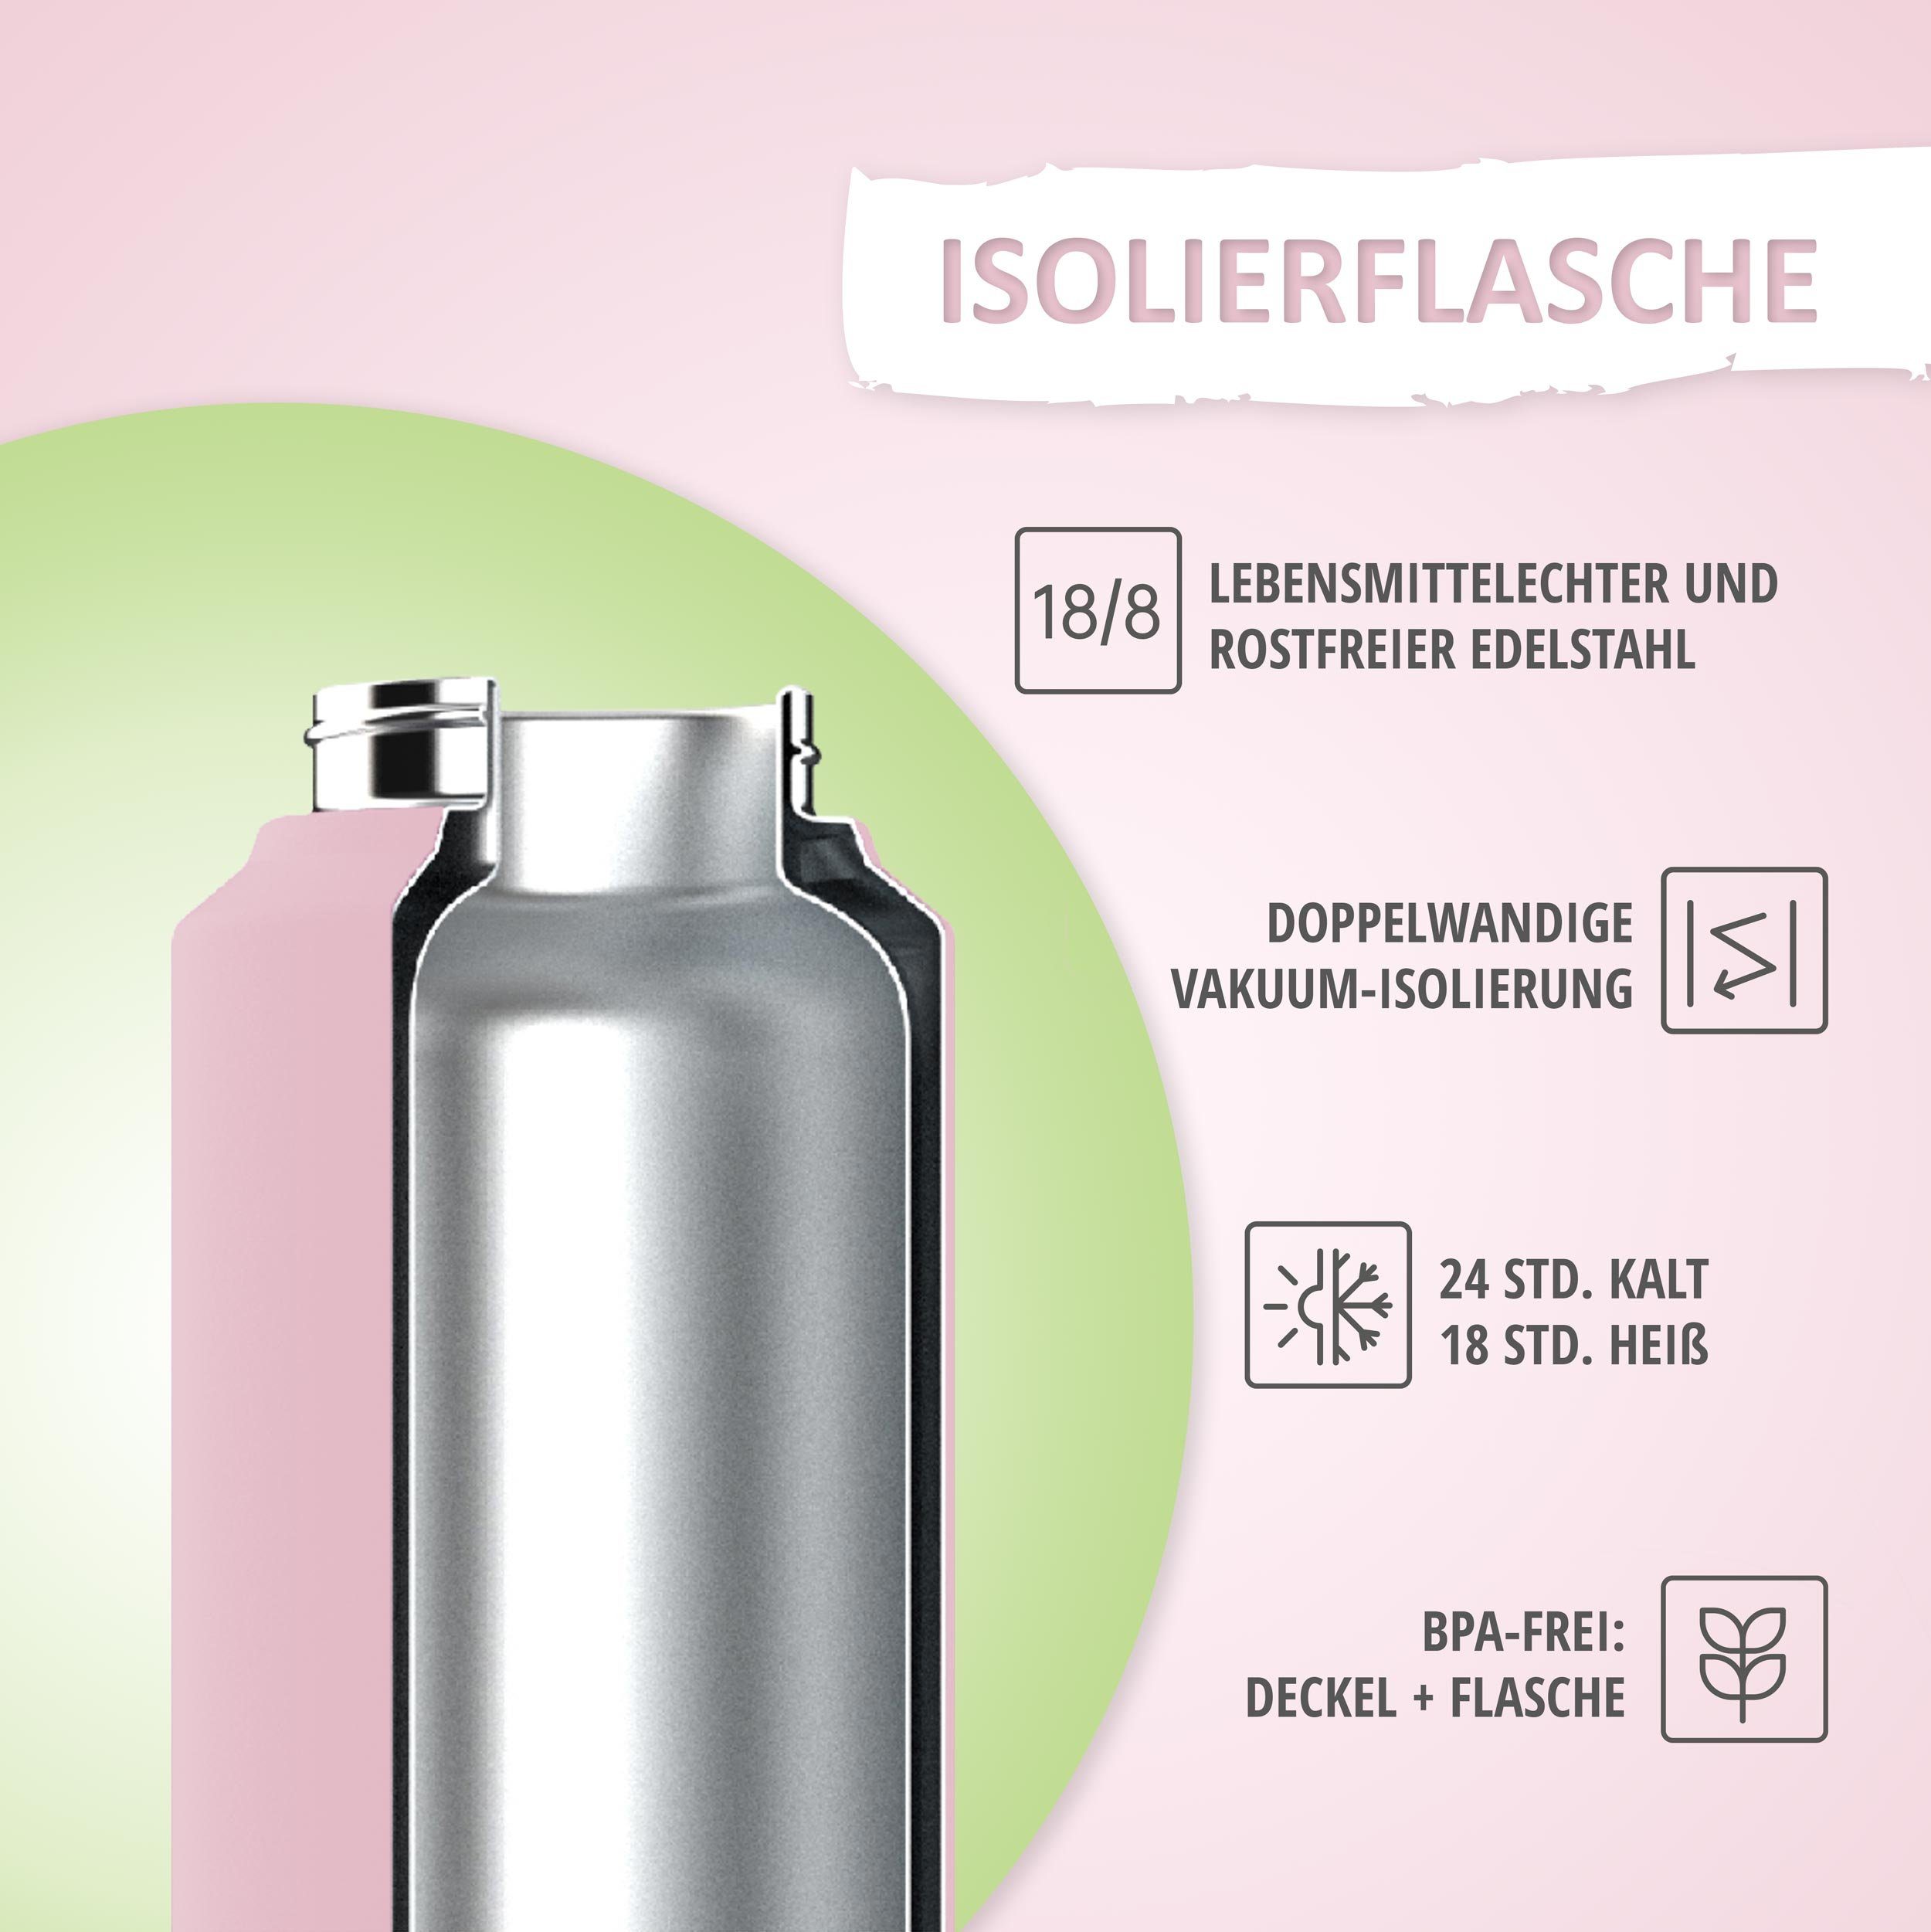 oder 350ml Rosa/Light Green Trinkflasche, 500ml Edelstahl, Isolierflasche Inhalt auslaufsicher, BPA-frei, kyds Inhalt